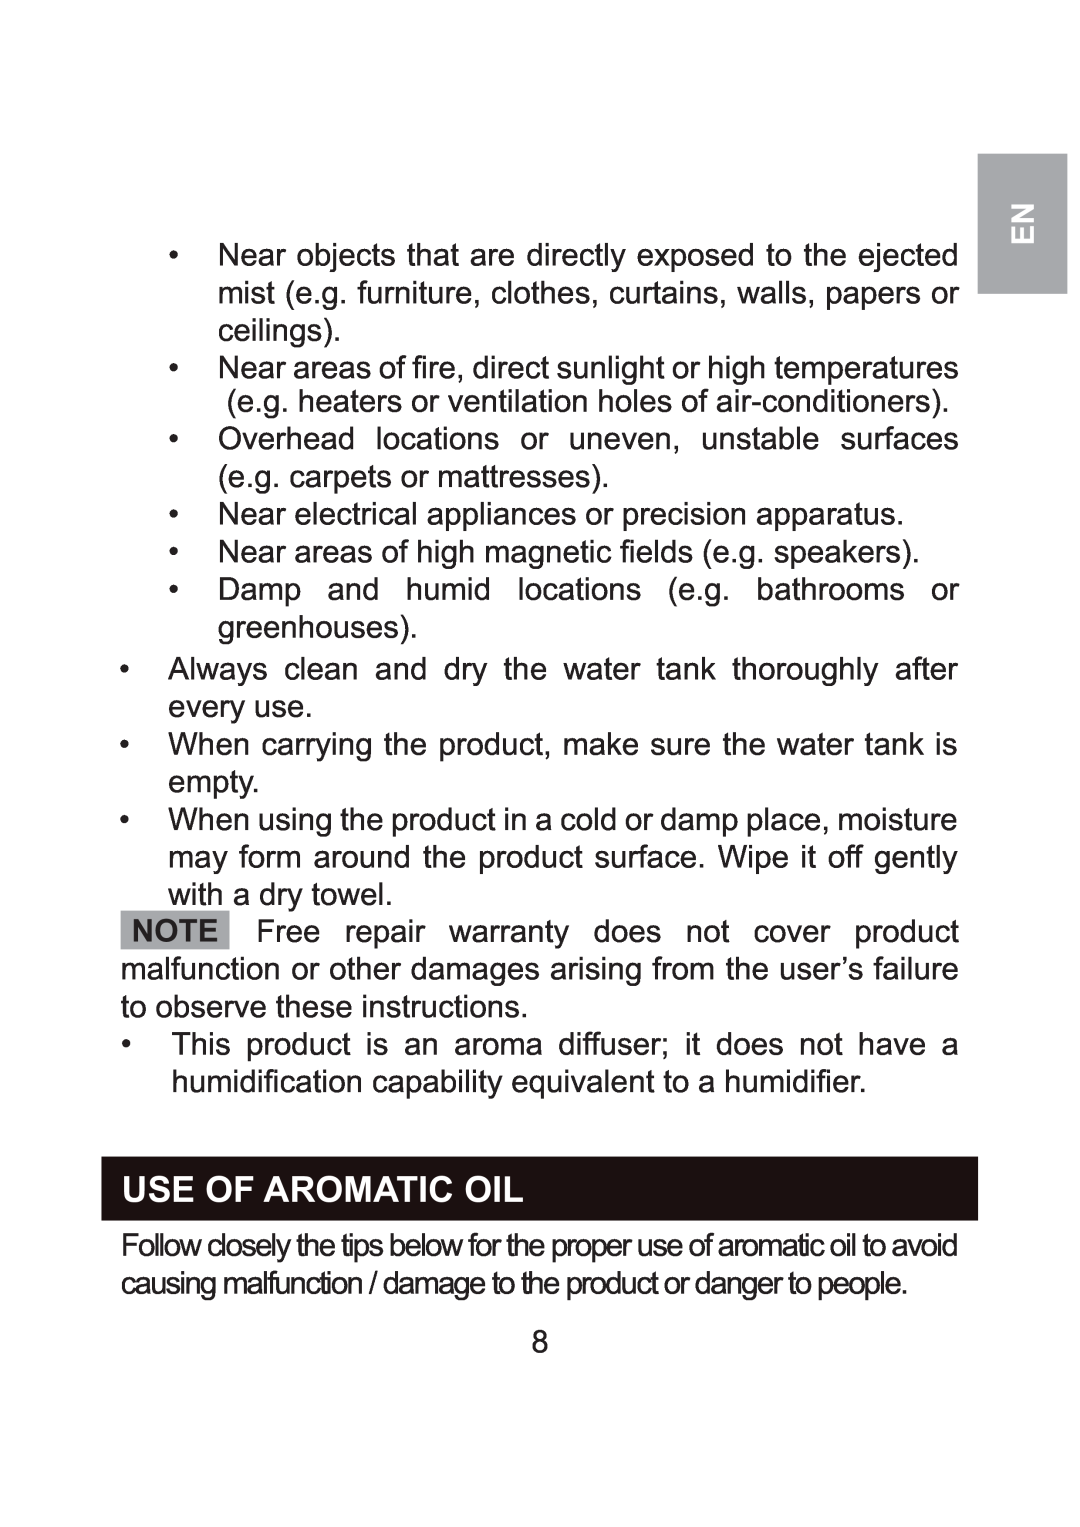 Oregon Scientific WS904 user manual Use Of Aromatic Oil 